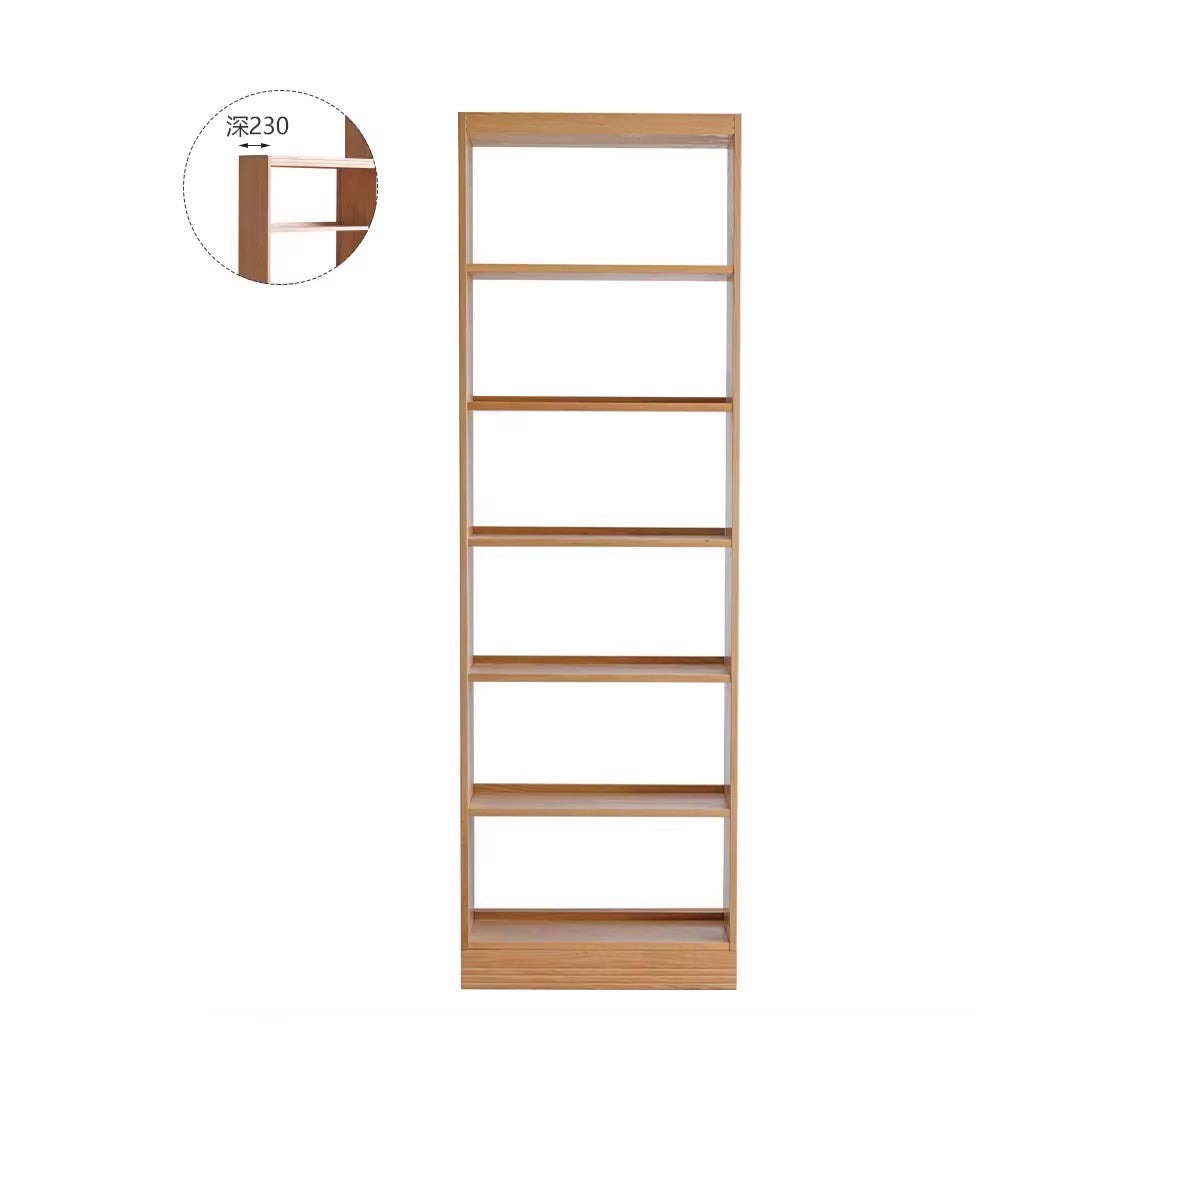 Floor To Ceiling Bookshelves Oak solid wood"